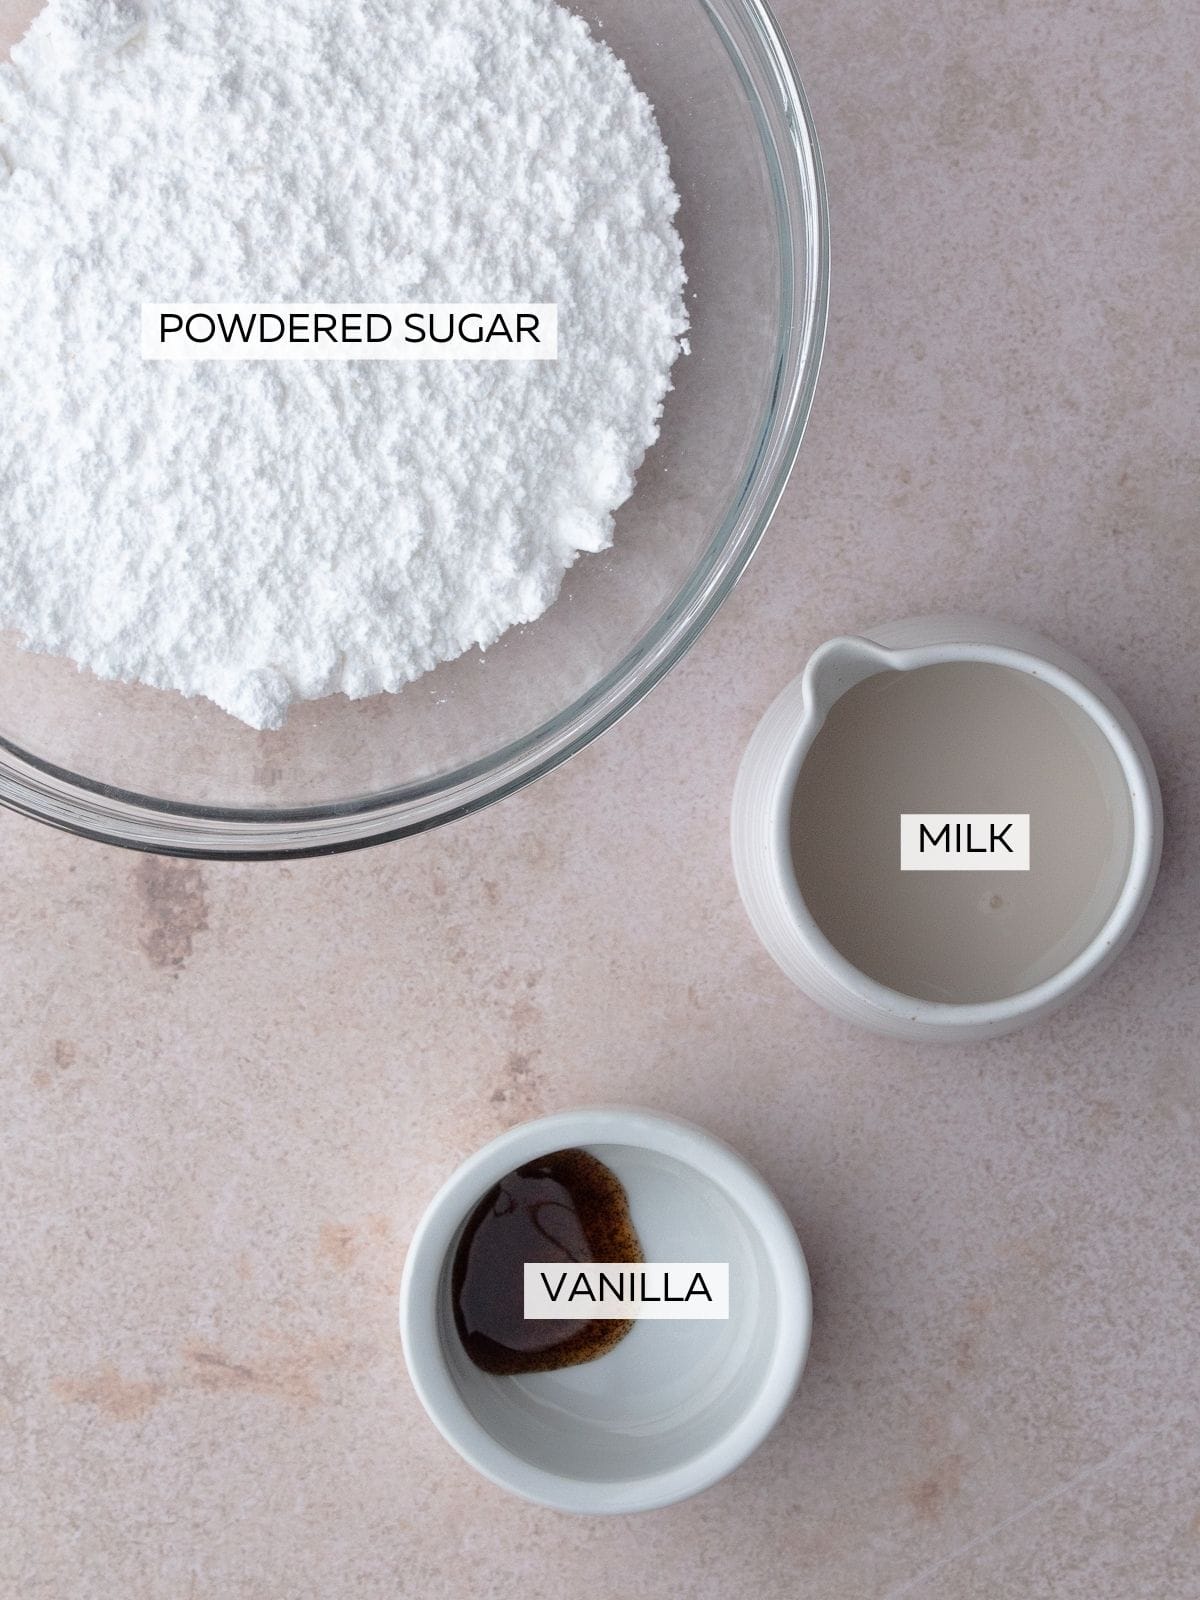 Ingredients for vanilla glaze